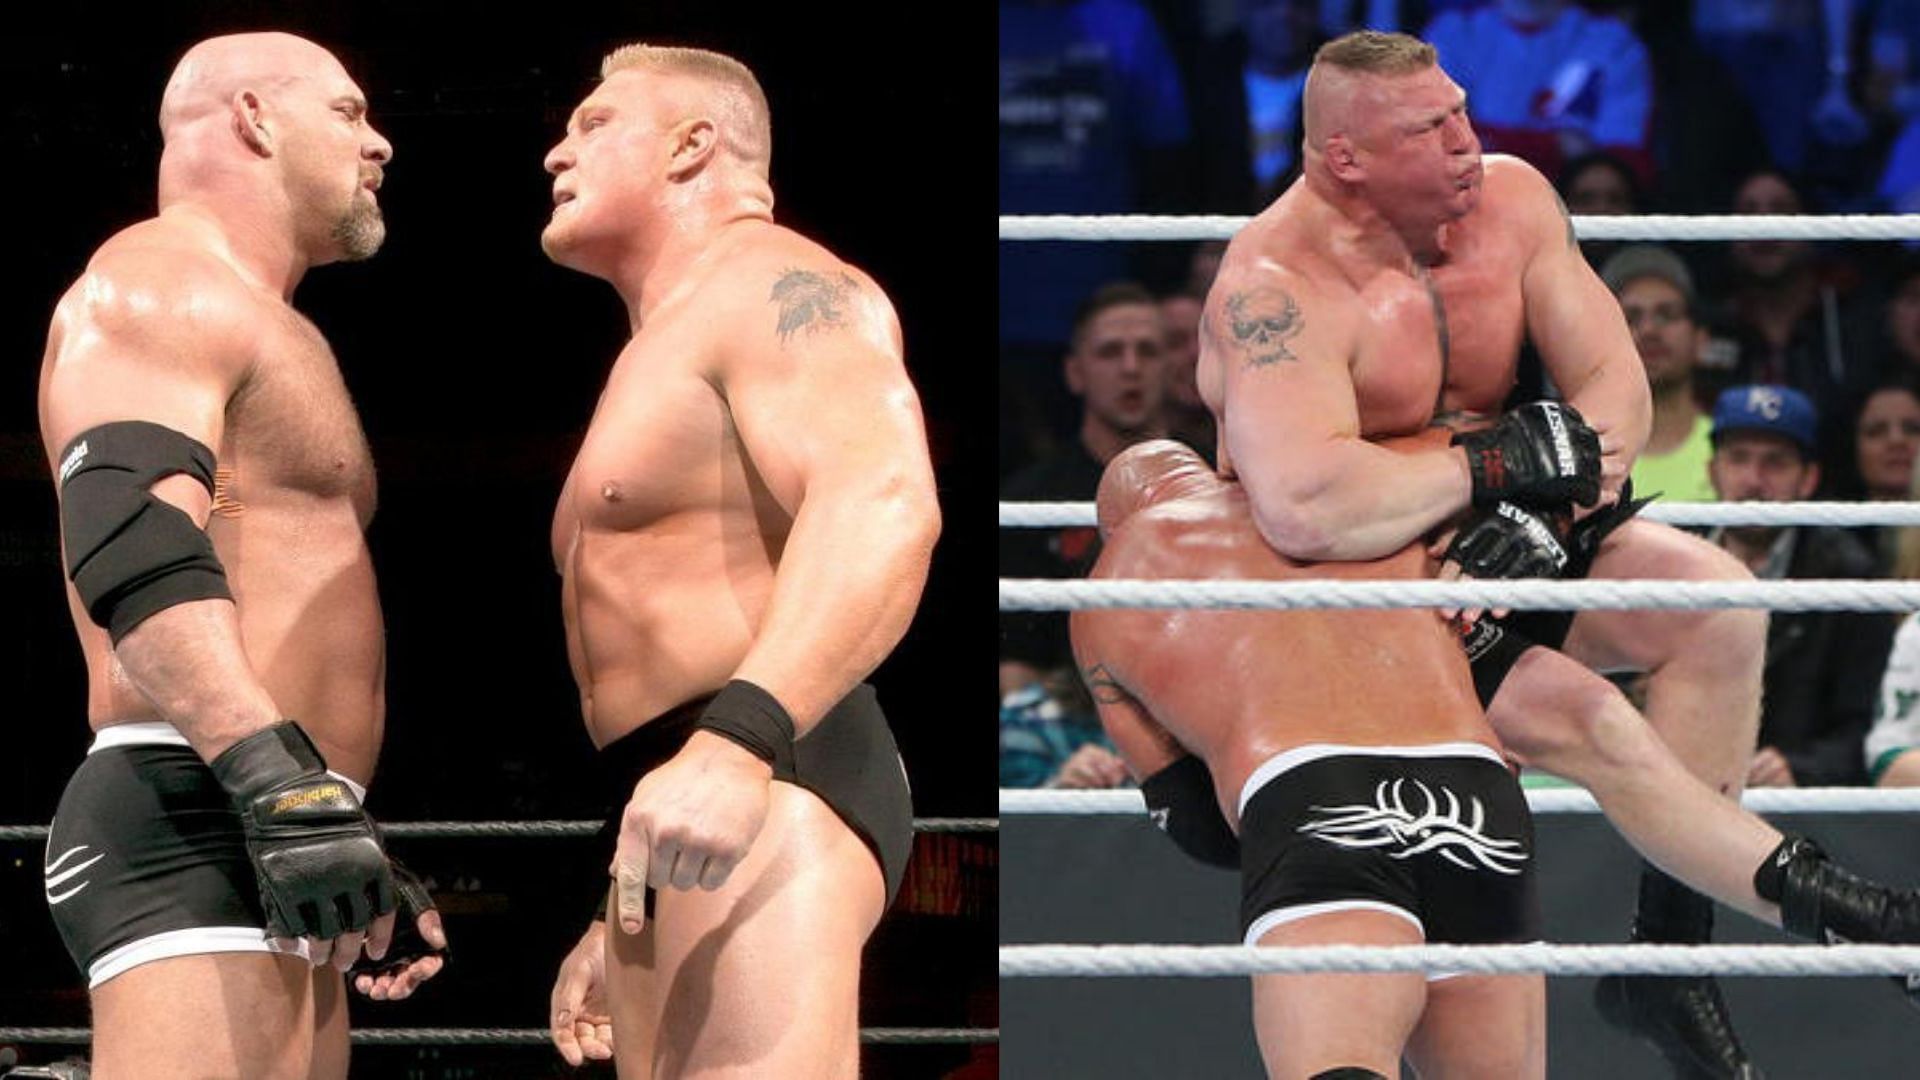 WWE legends Goldberg and Brock Lesnar